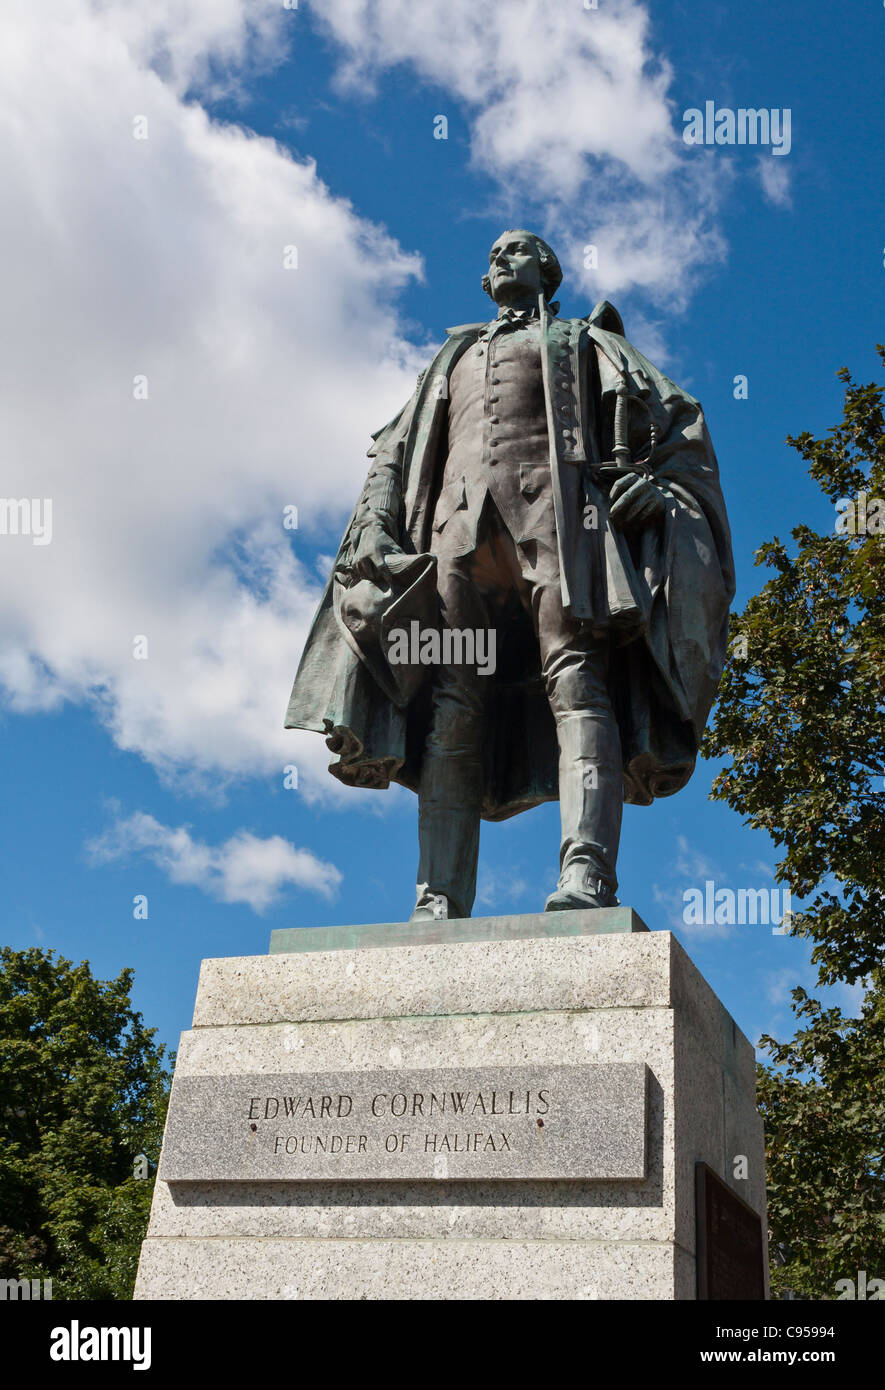 Statua di Edward Cornwallis, fondatore di Halifax. Foto Stock